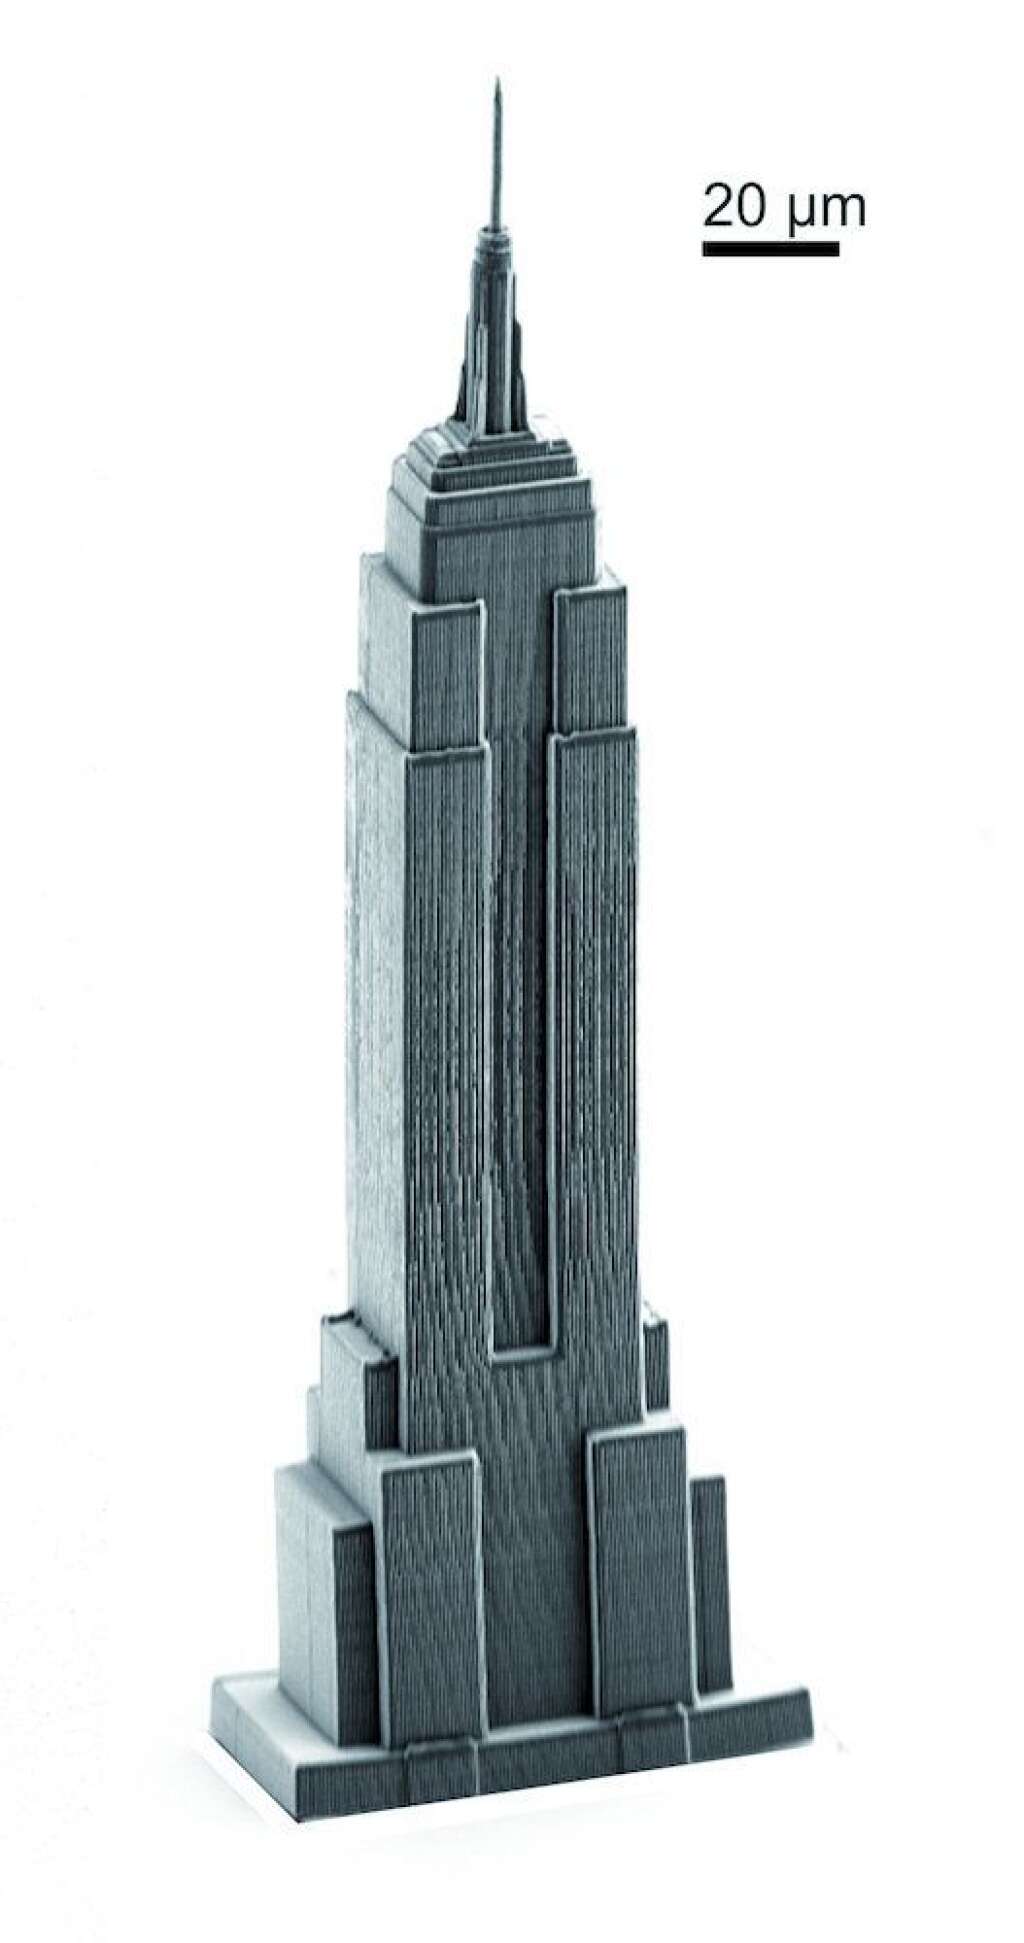 L'Empire State Building -